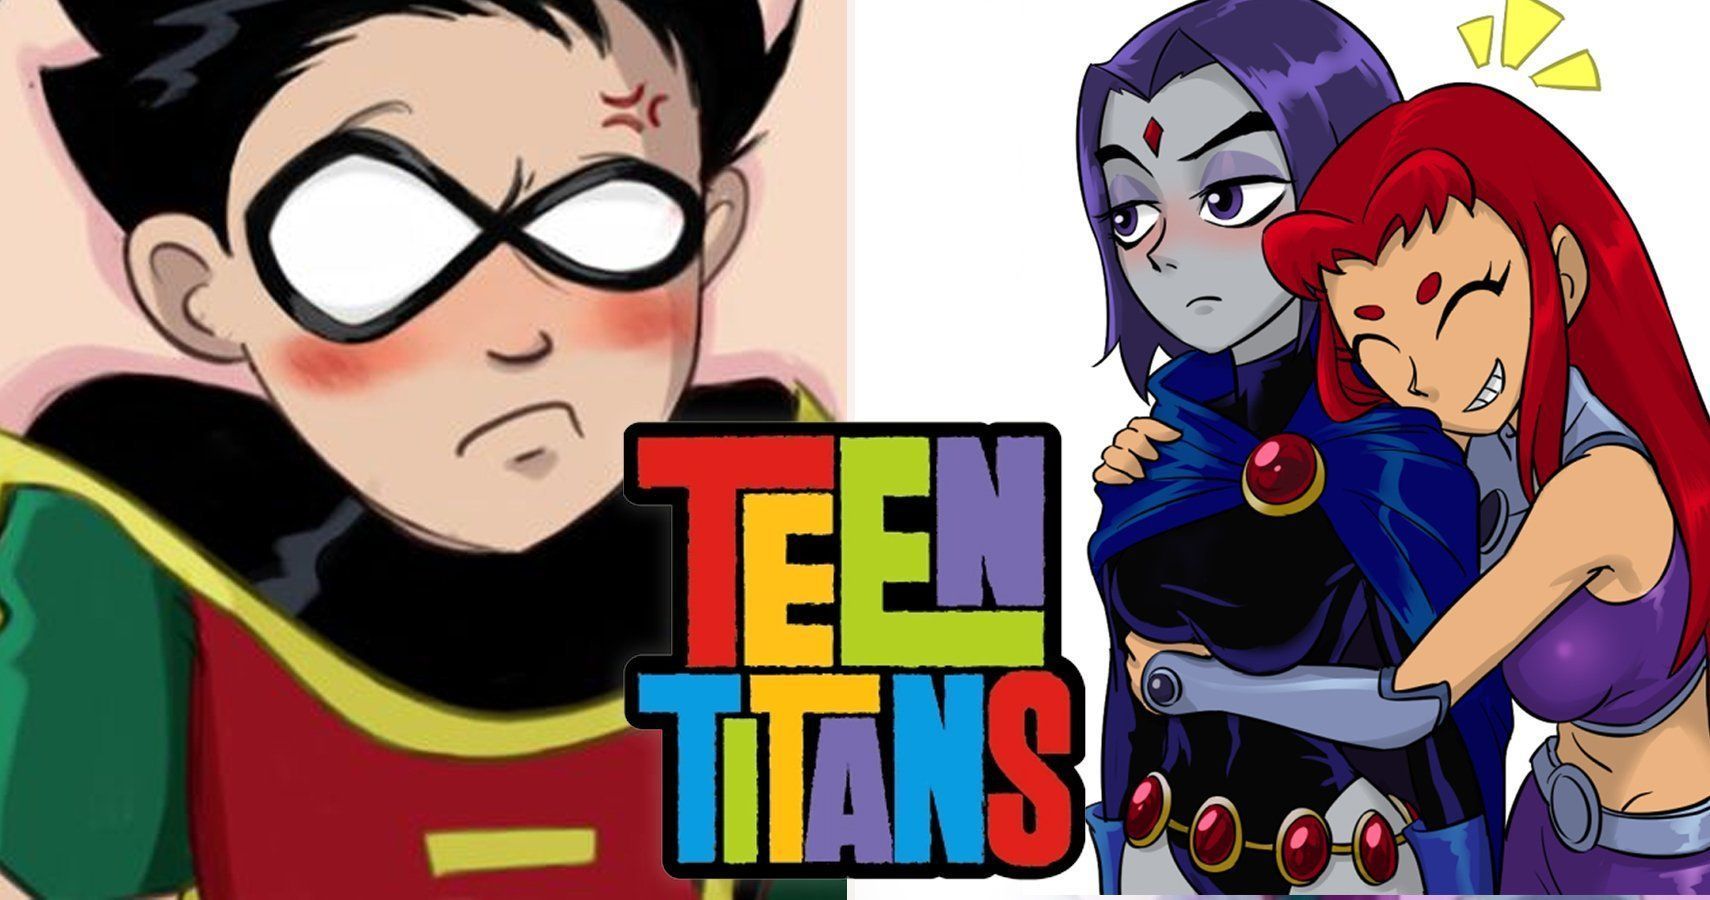 Teen titans mother may eye